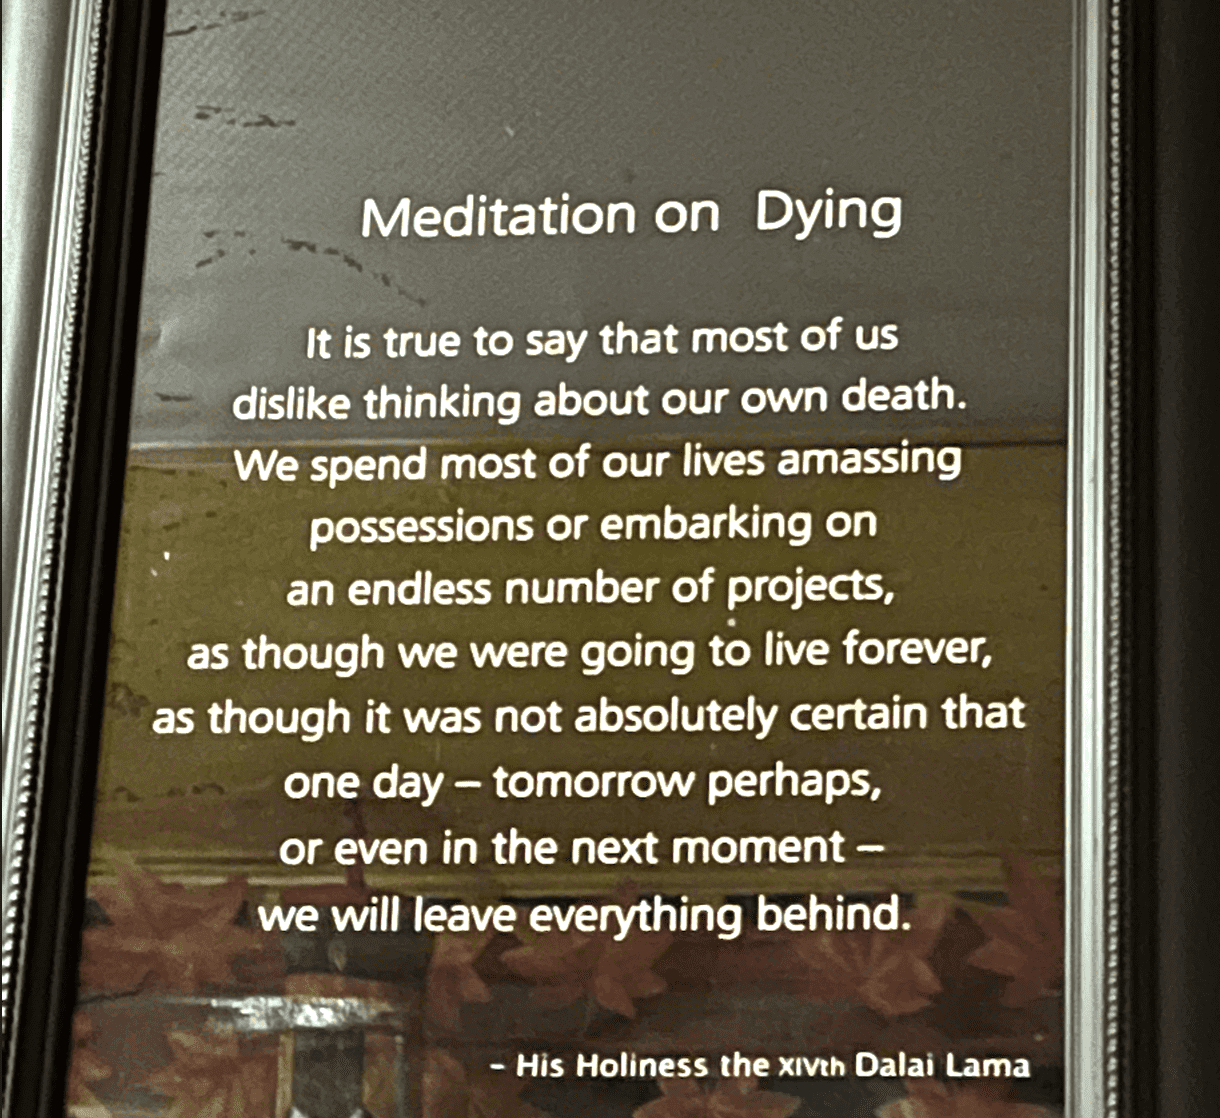 Meditation on Dying by the Dalai Lama